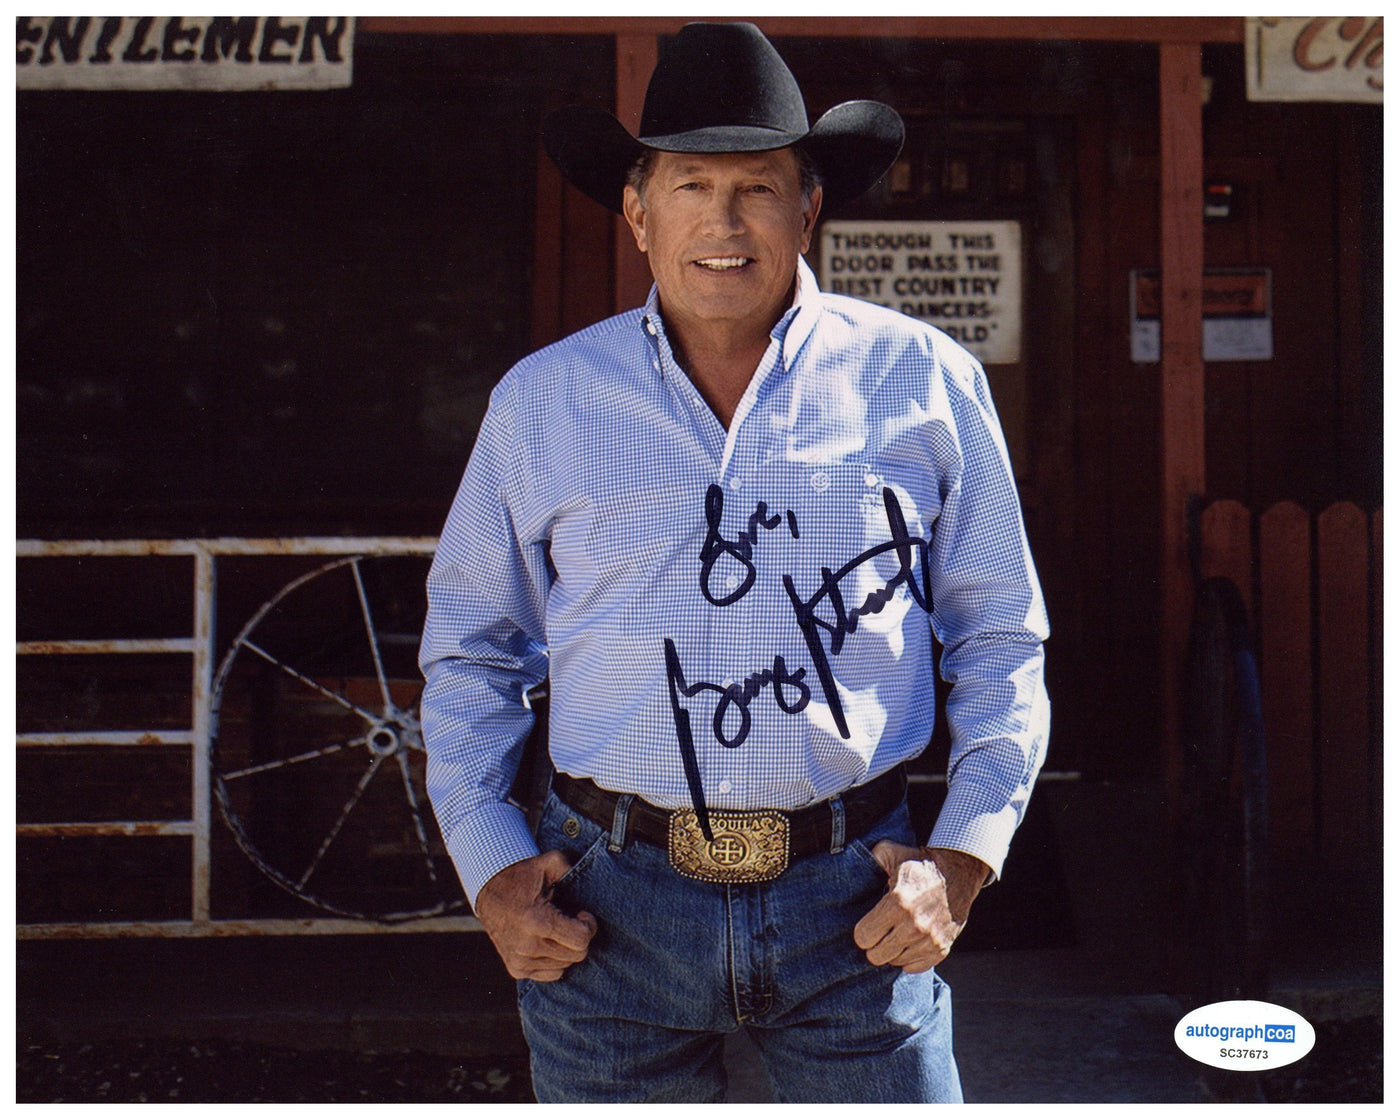 George Strait Signed 8x10 Photo Music Country Legend Autographed Autograph COA